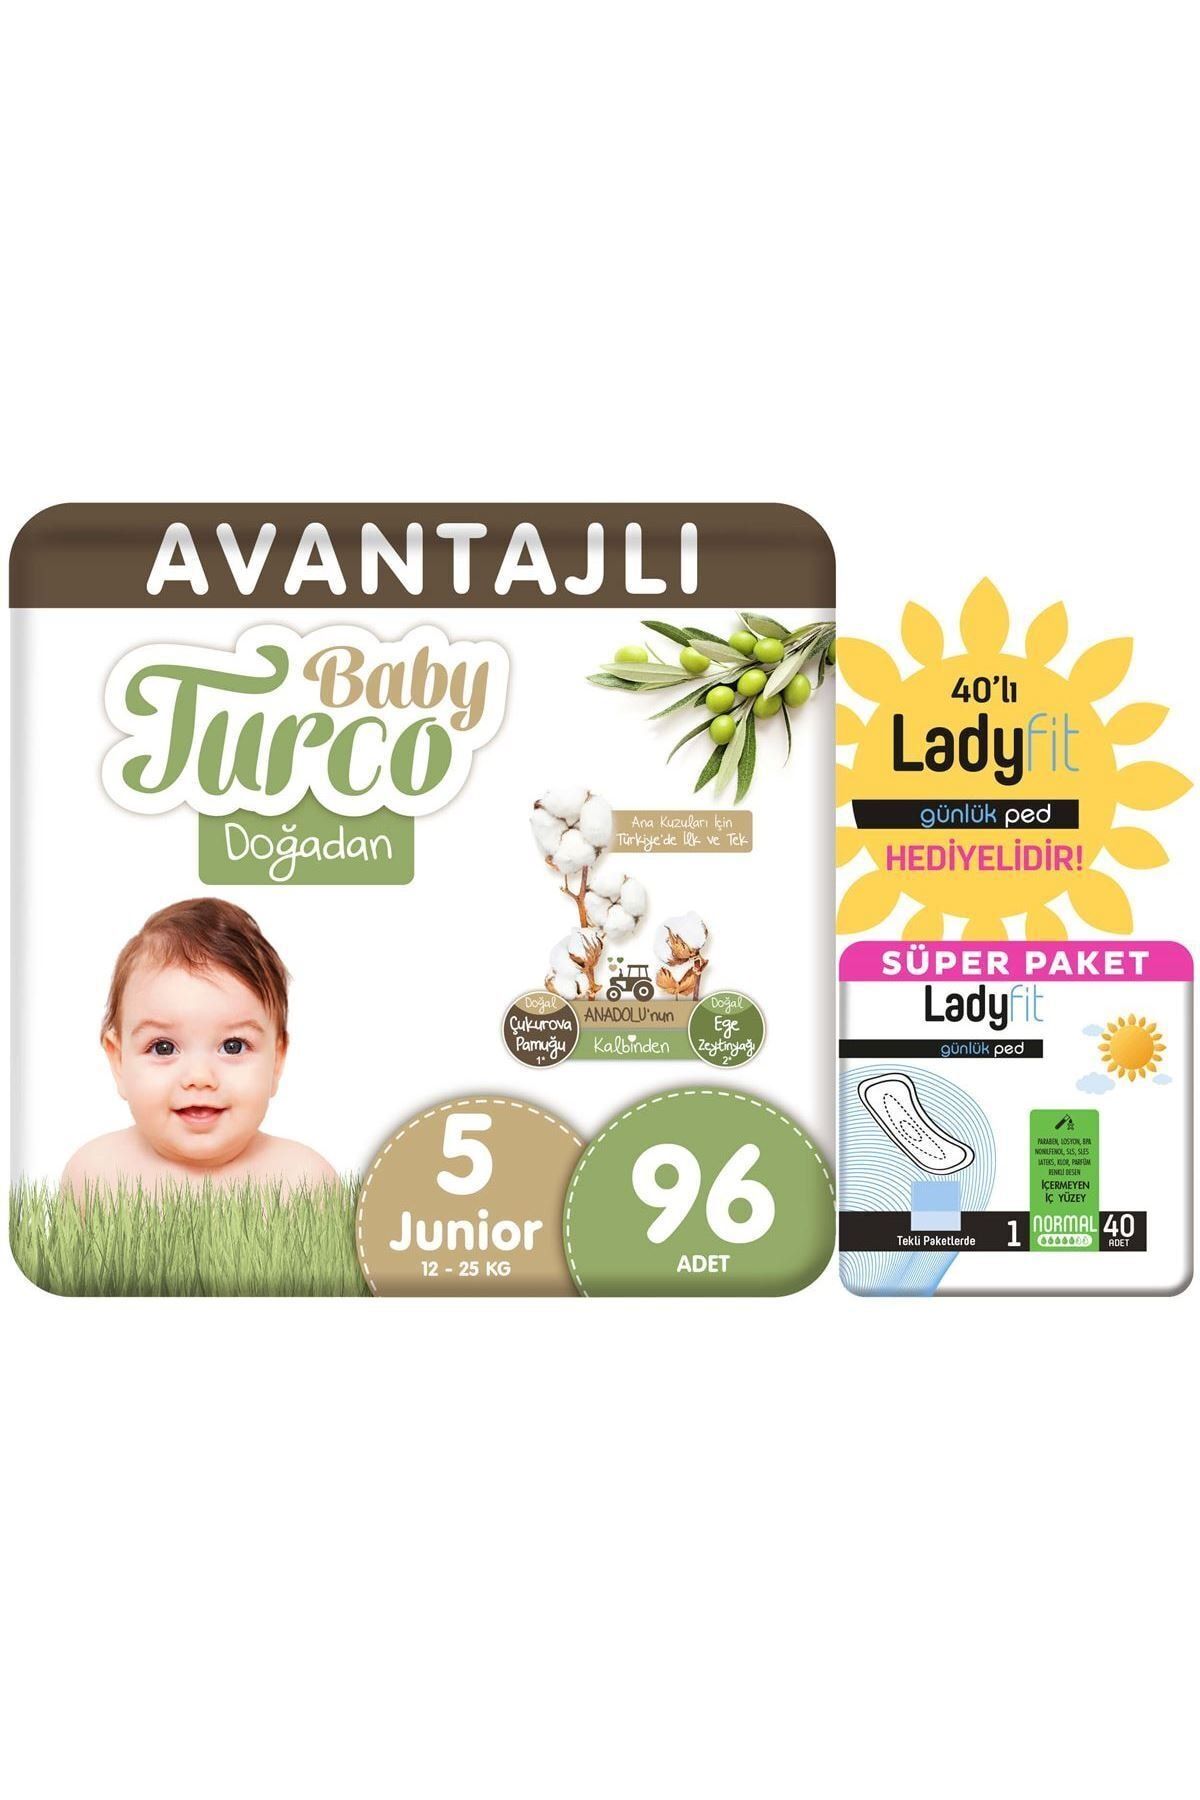 Baby Turco Doğadan Avantajlı Paket Bebek Bezi 5 Numara Junior 96 Adet + Günlük Ped Normal 40 Adet